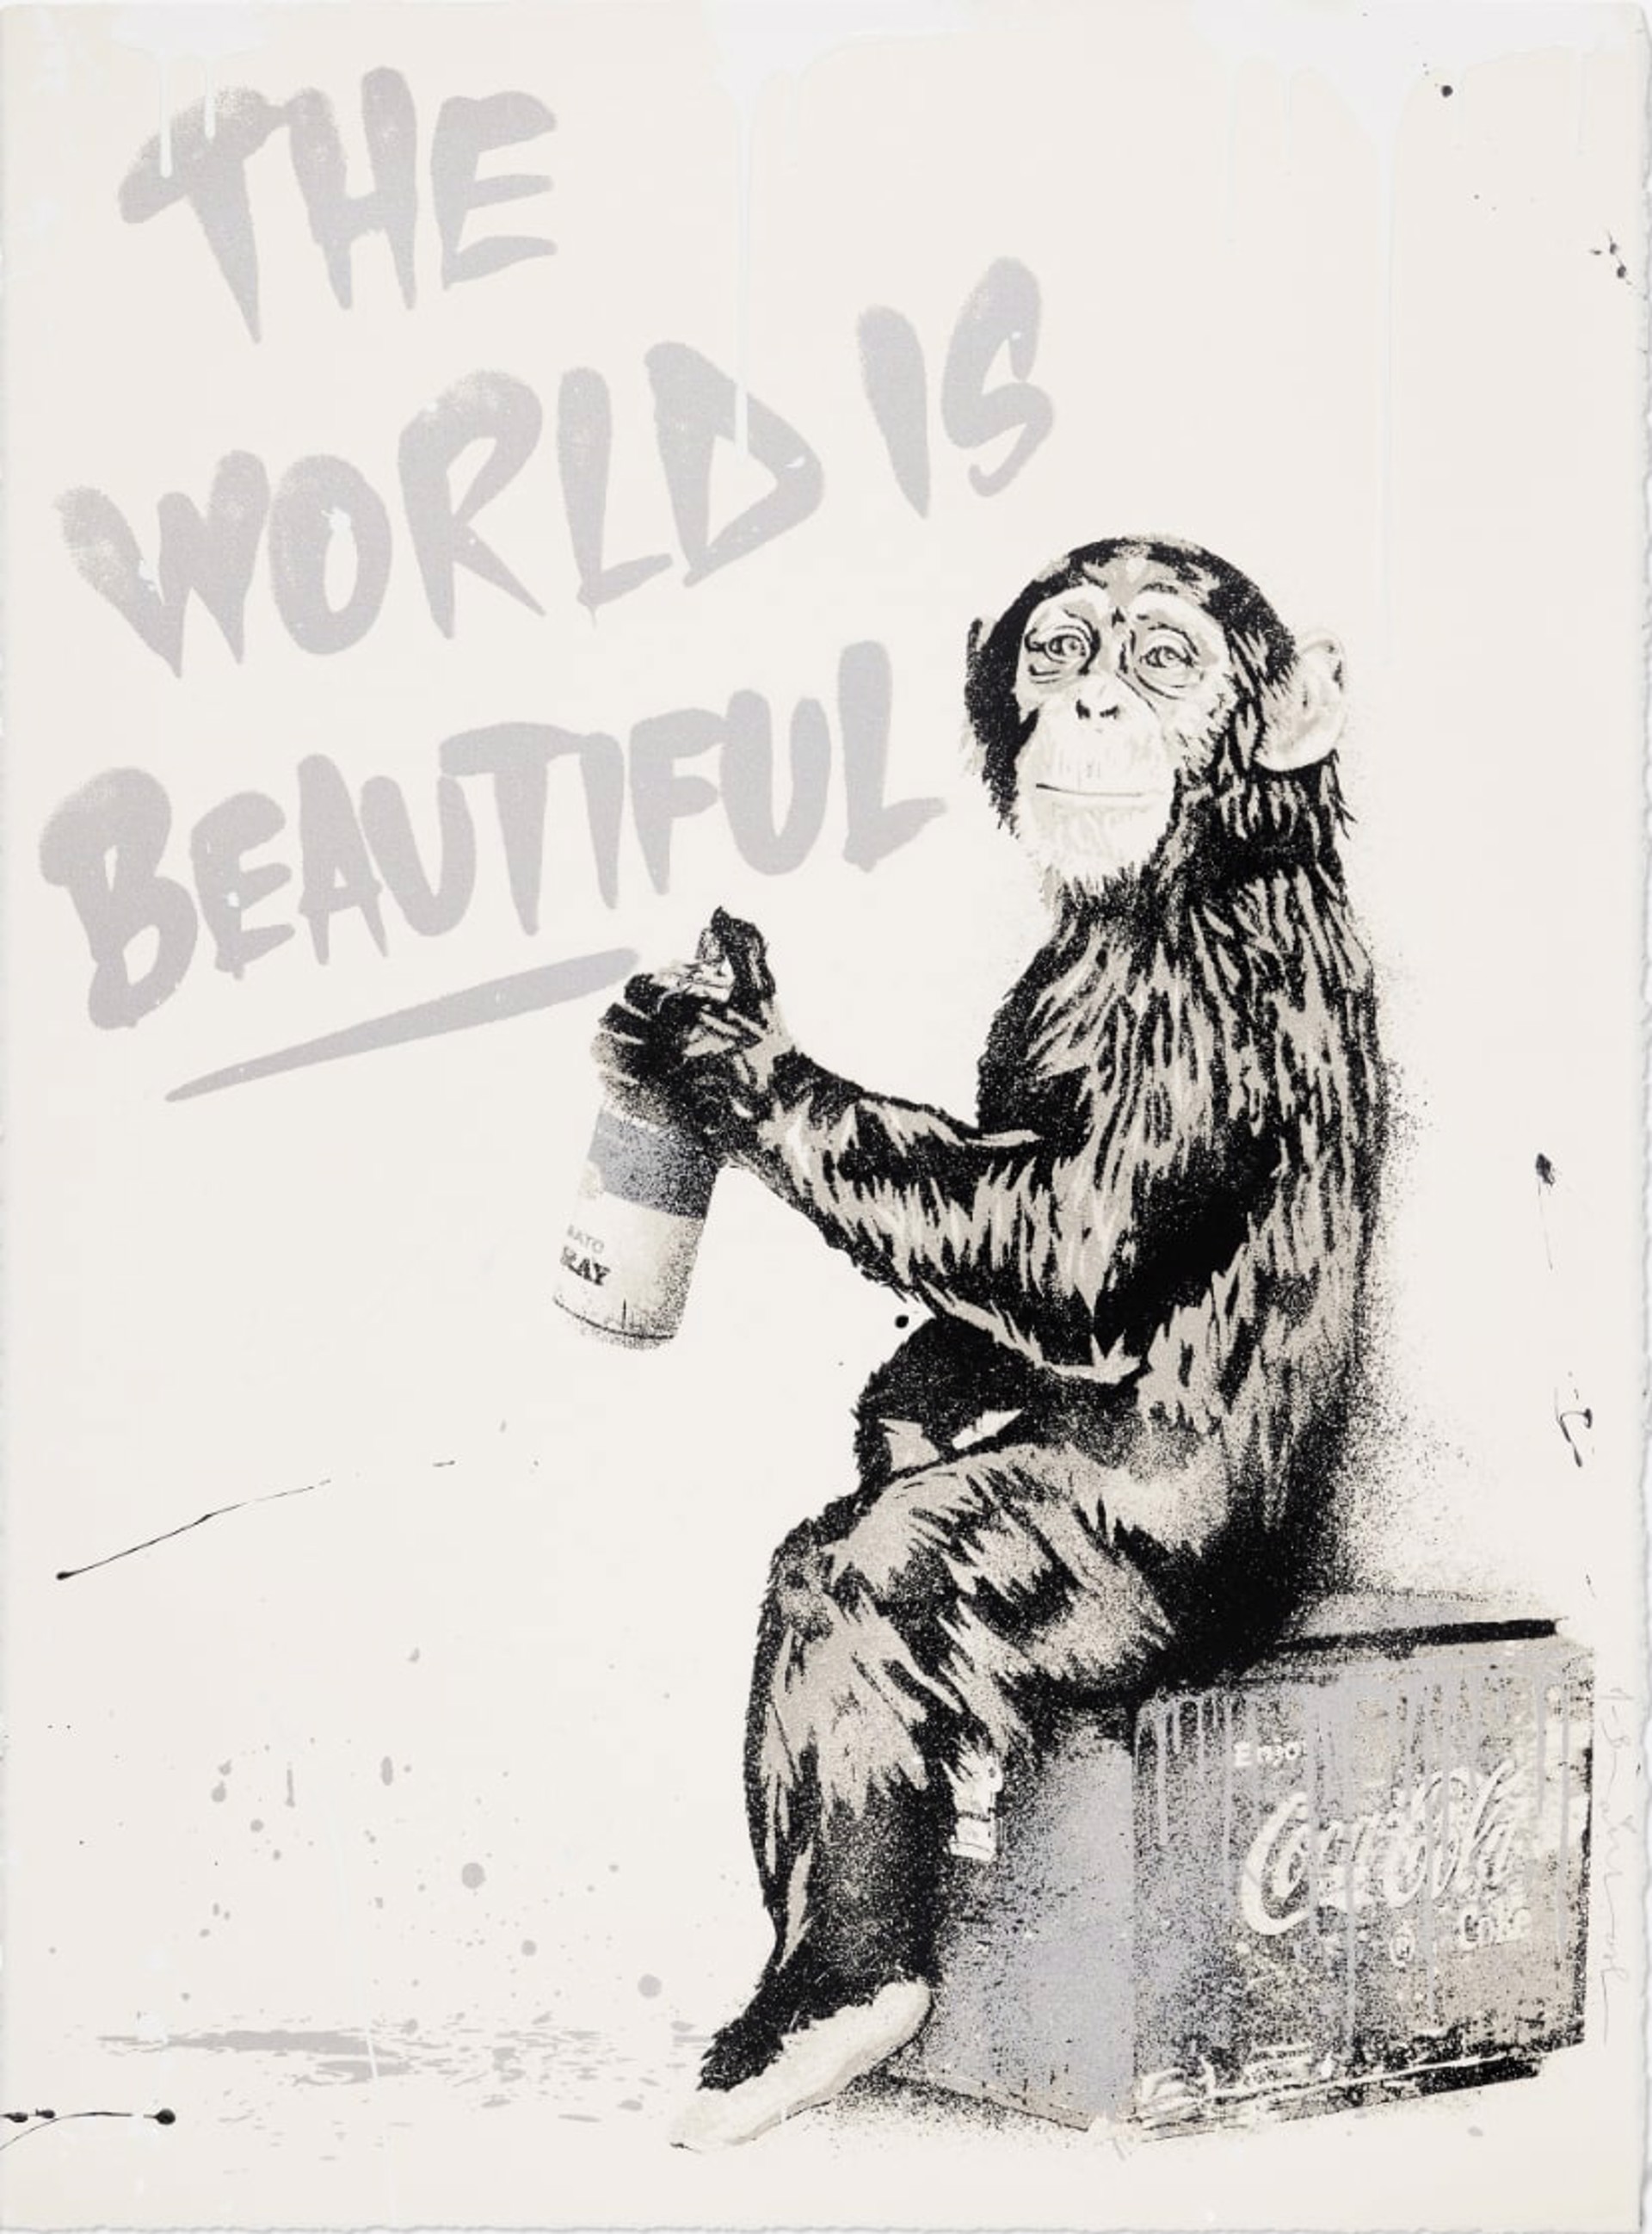 The World Is Beautiful by Mr. Brainwash